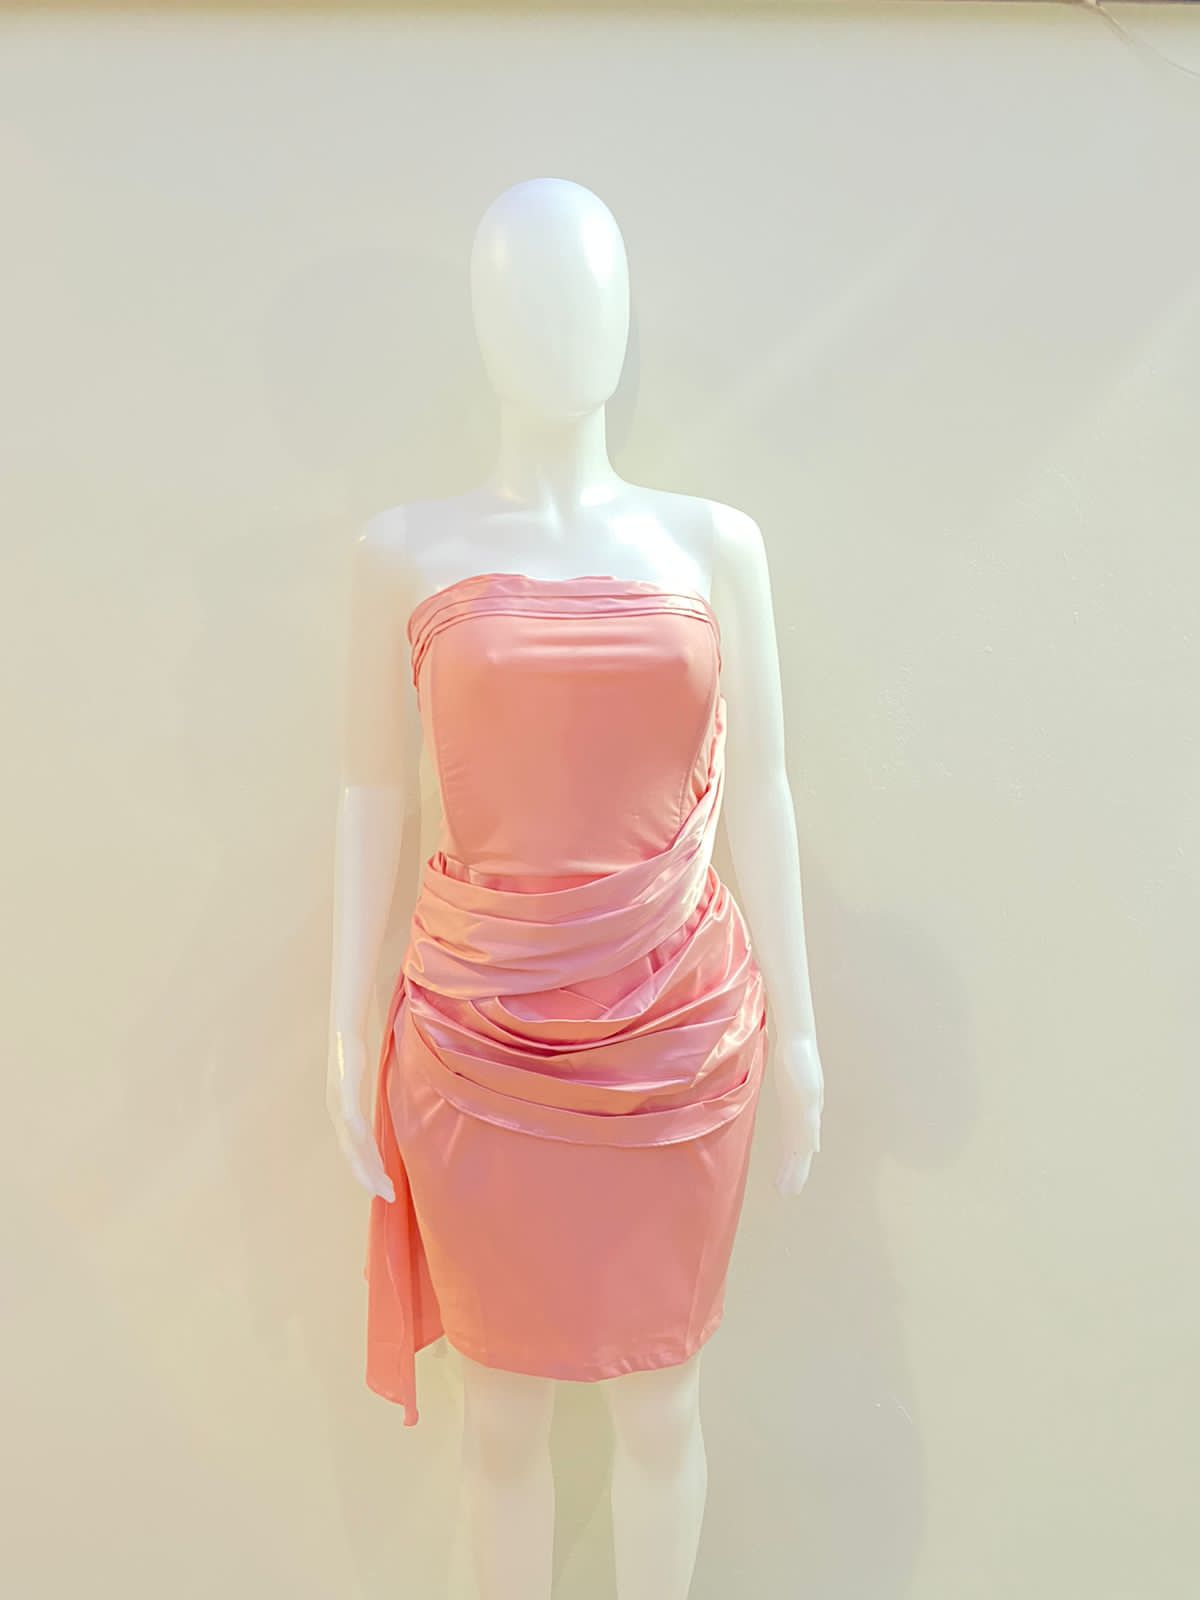 Vestido Fashion Nova origina rosado con vuelos al frente